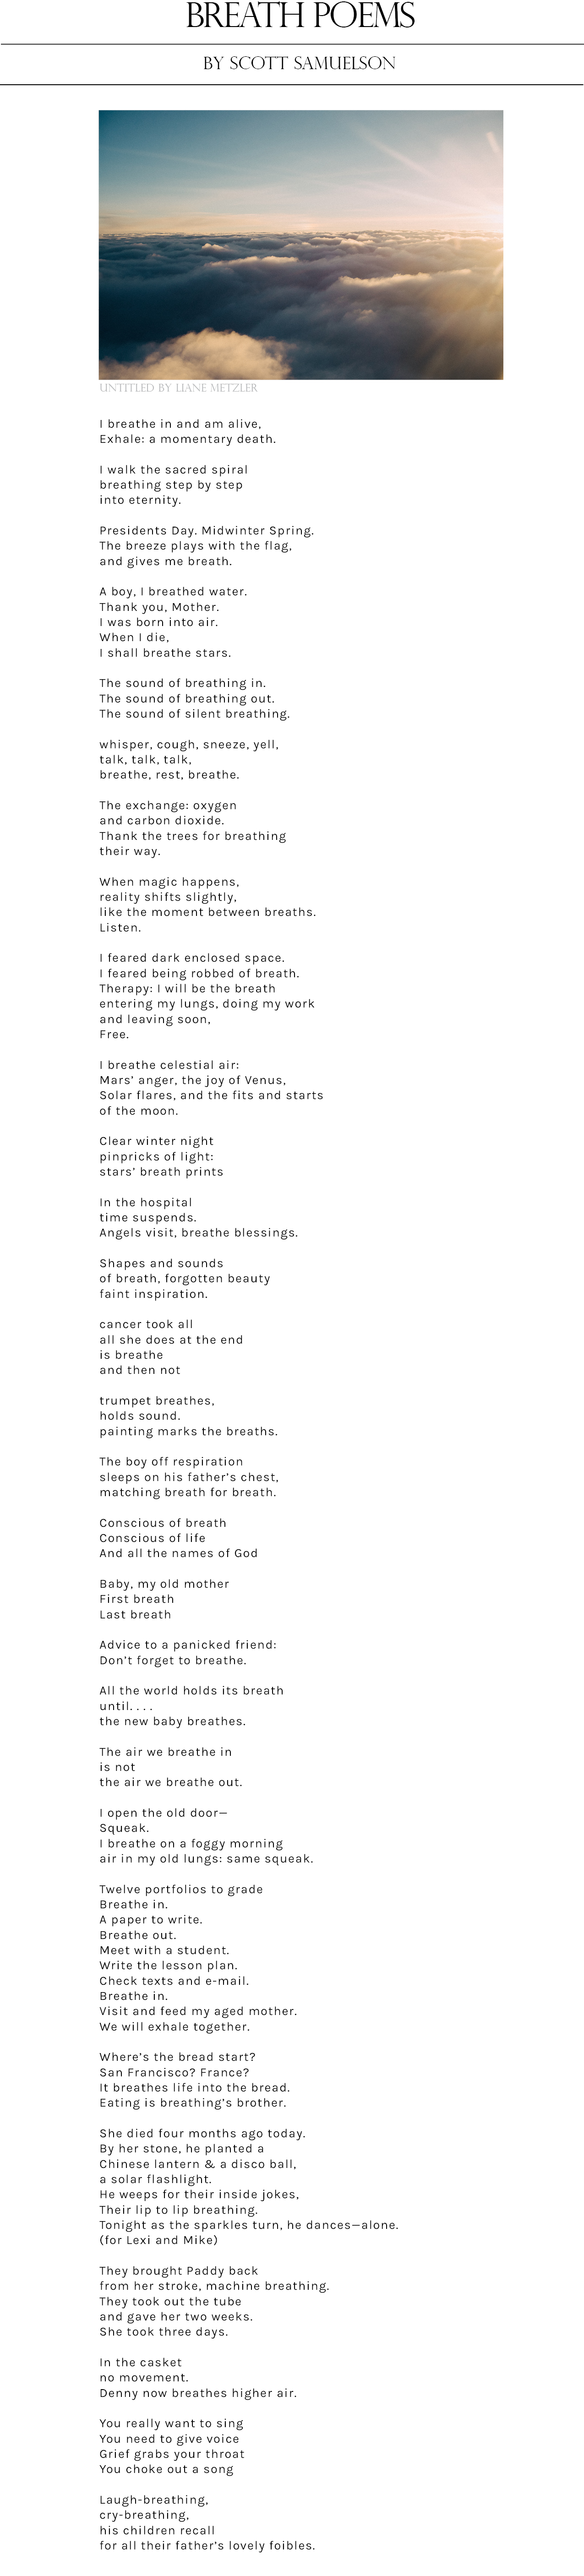 Breath Poems by Scott Samuelson